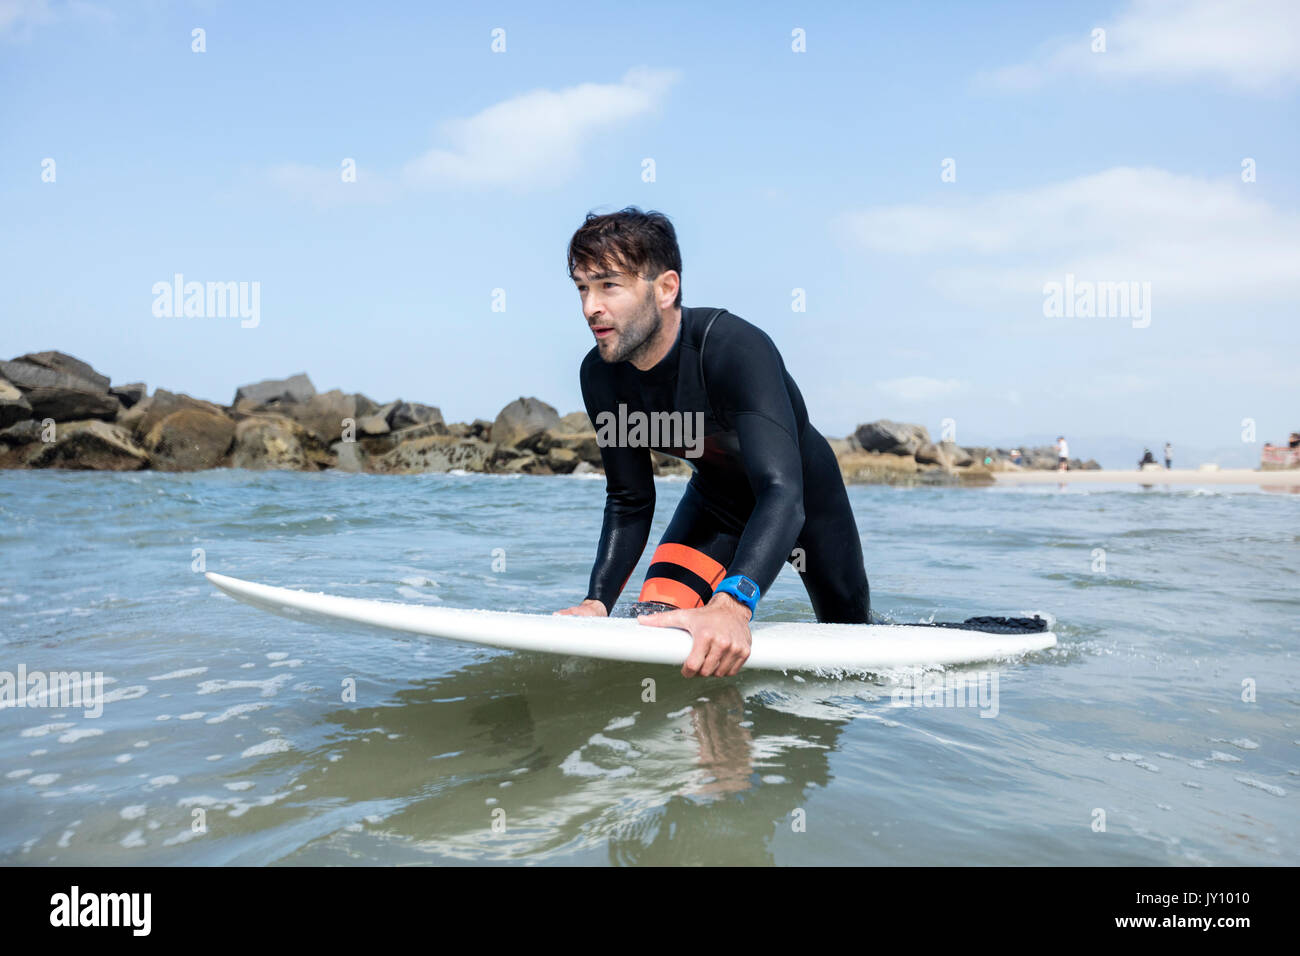 Caucasian man wading in ocean holding surfboard Stock Photo